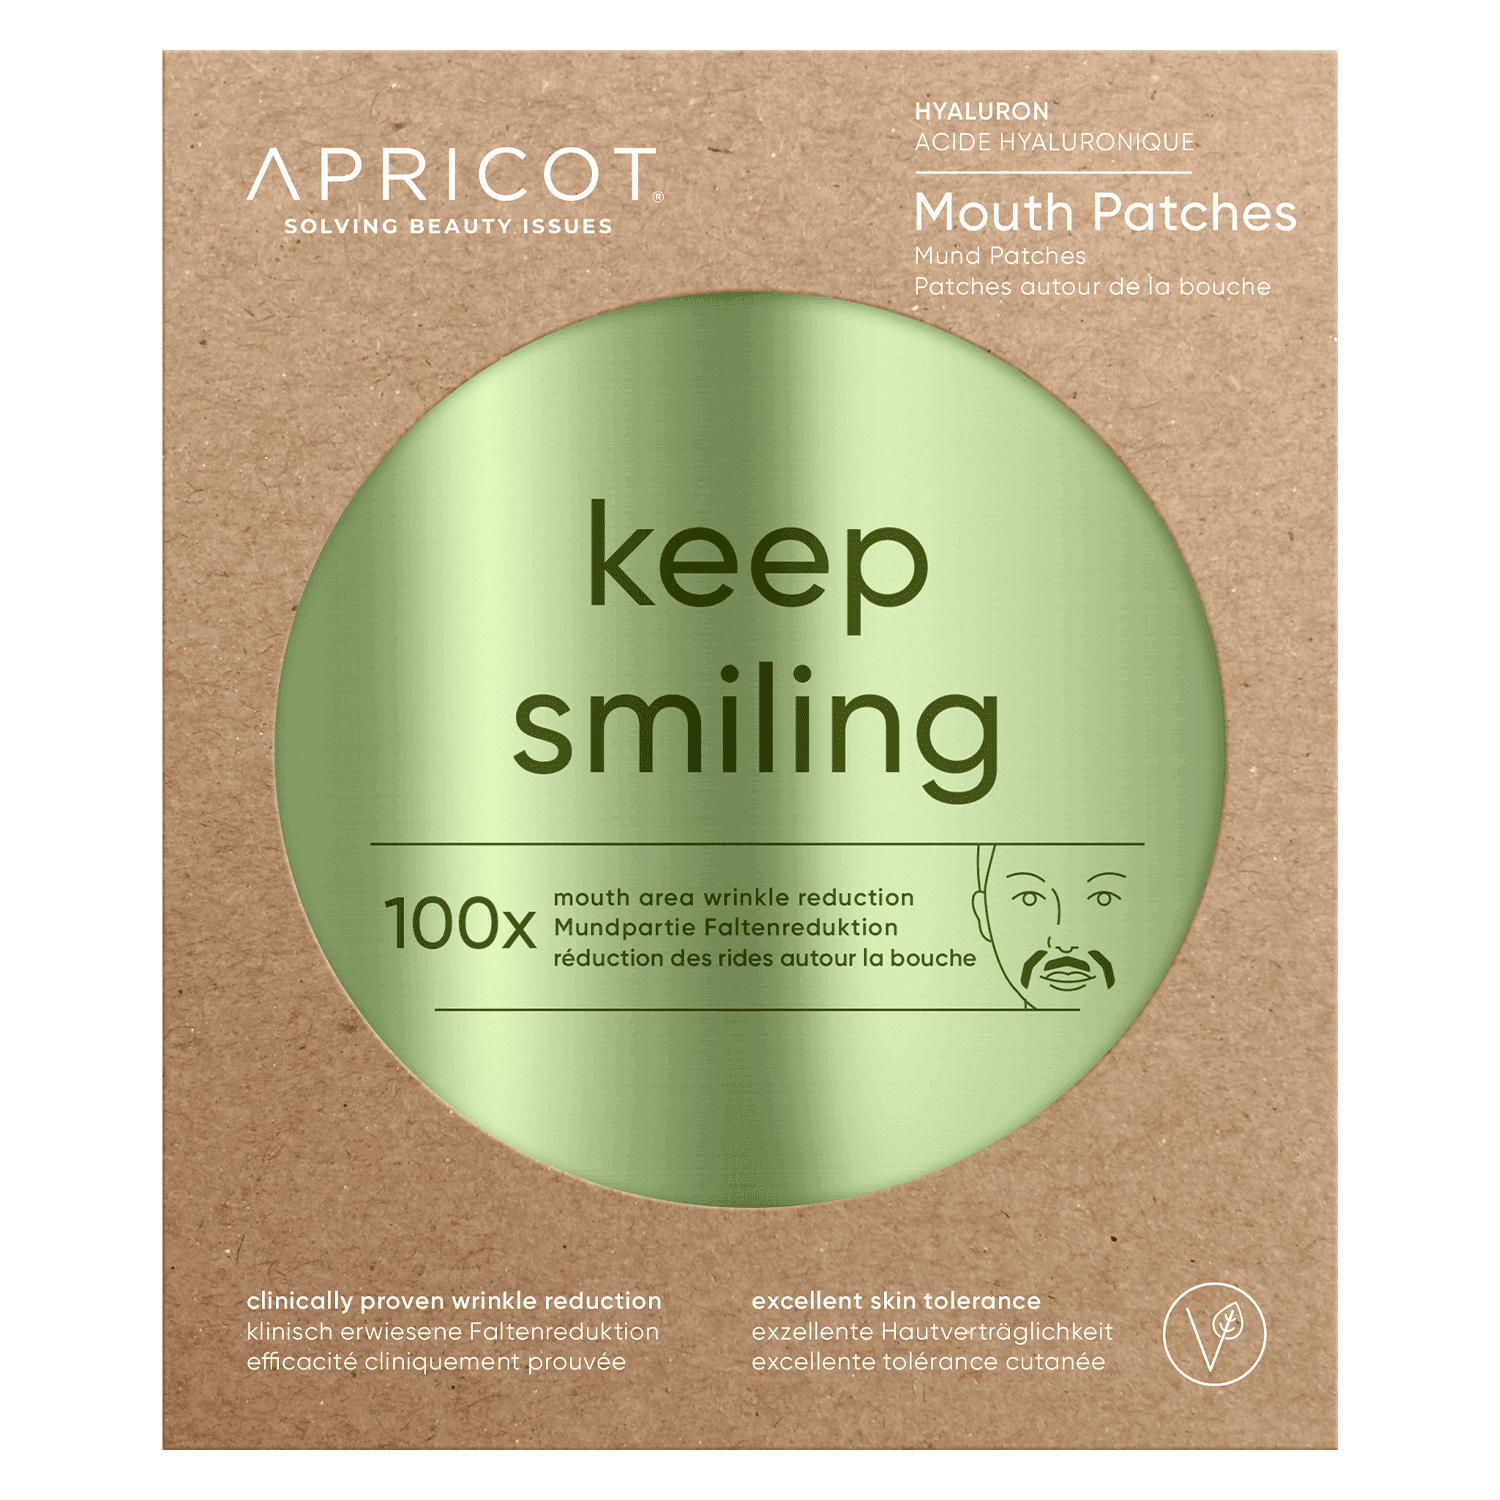 APRICOT - Anti-Falten-Mund Patches Hyaluron Keep Smiling